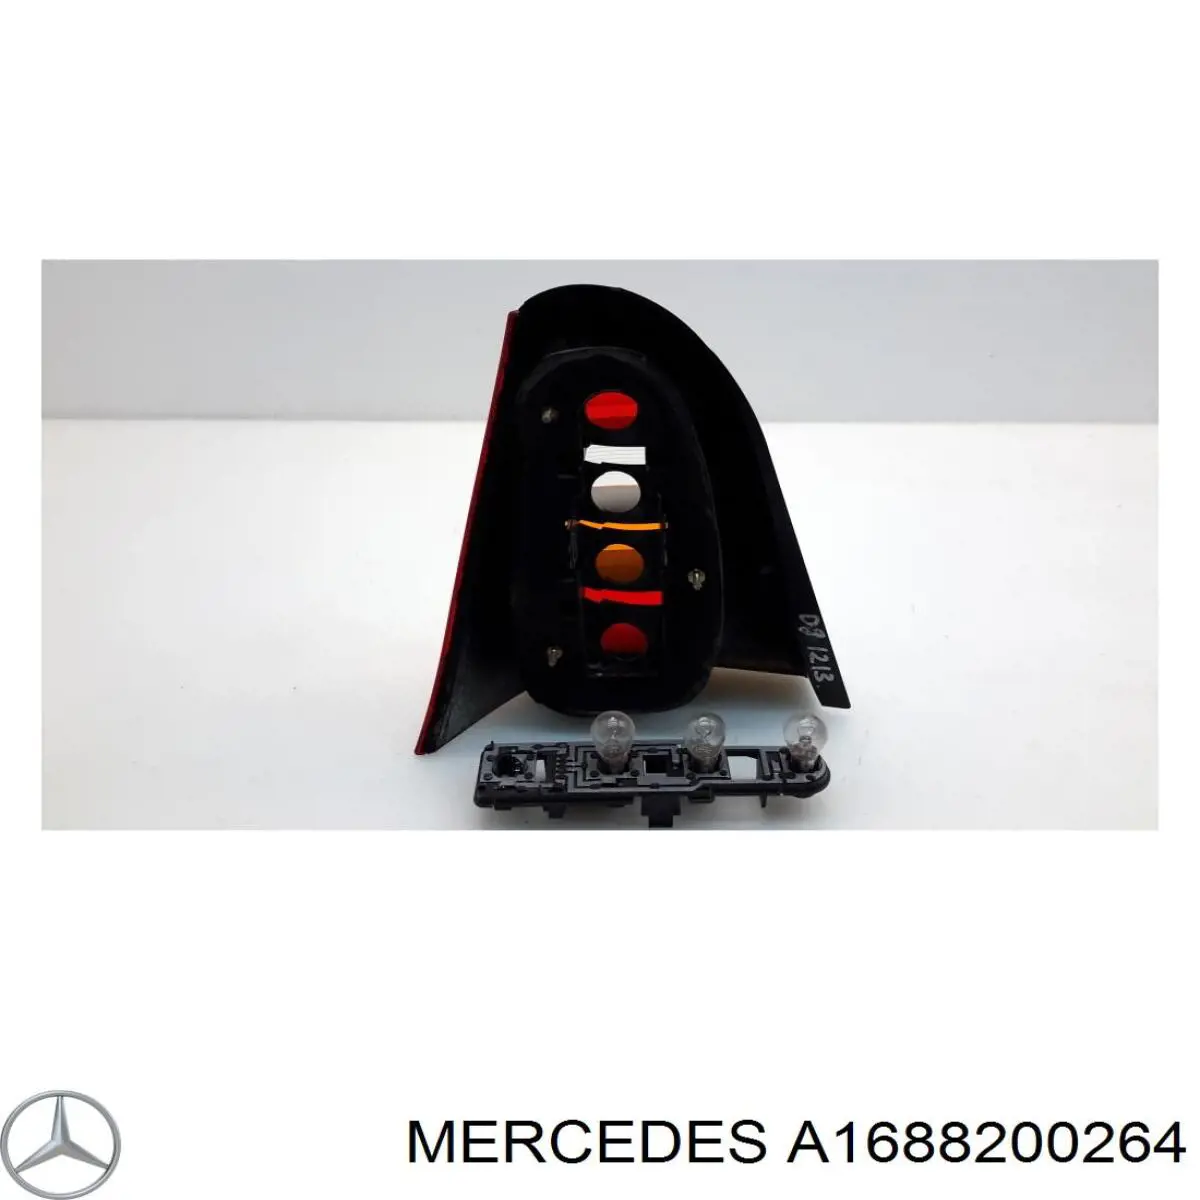 A1688200264 Mercedes piloto posterior derecho